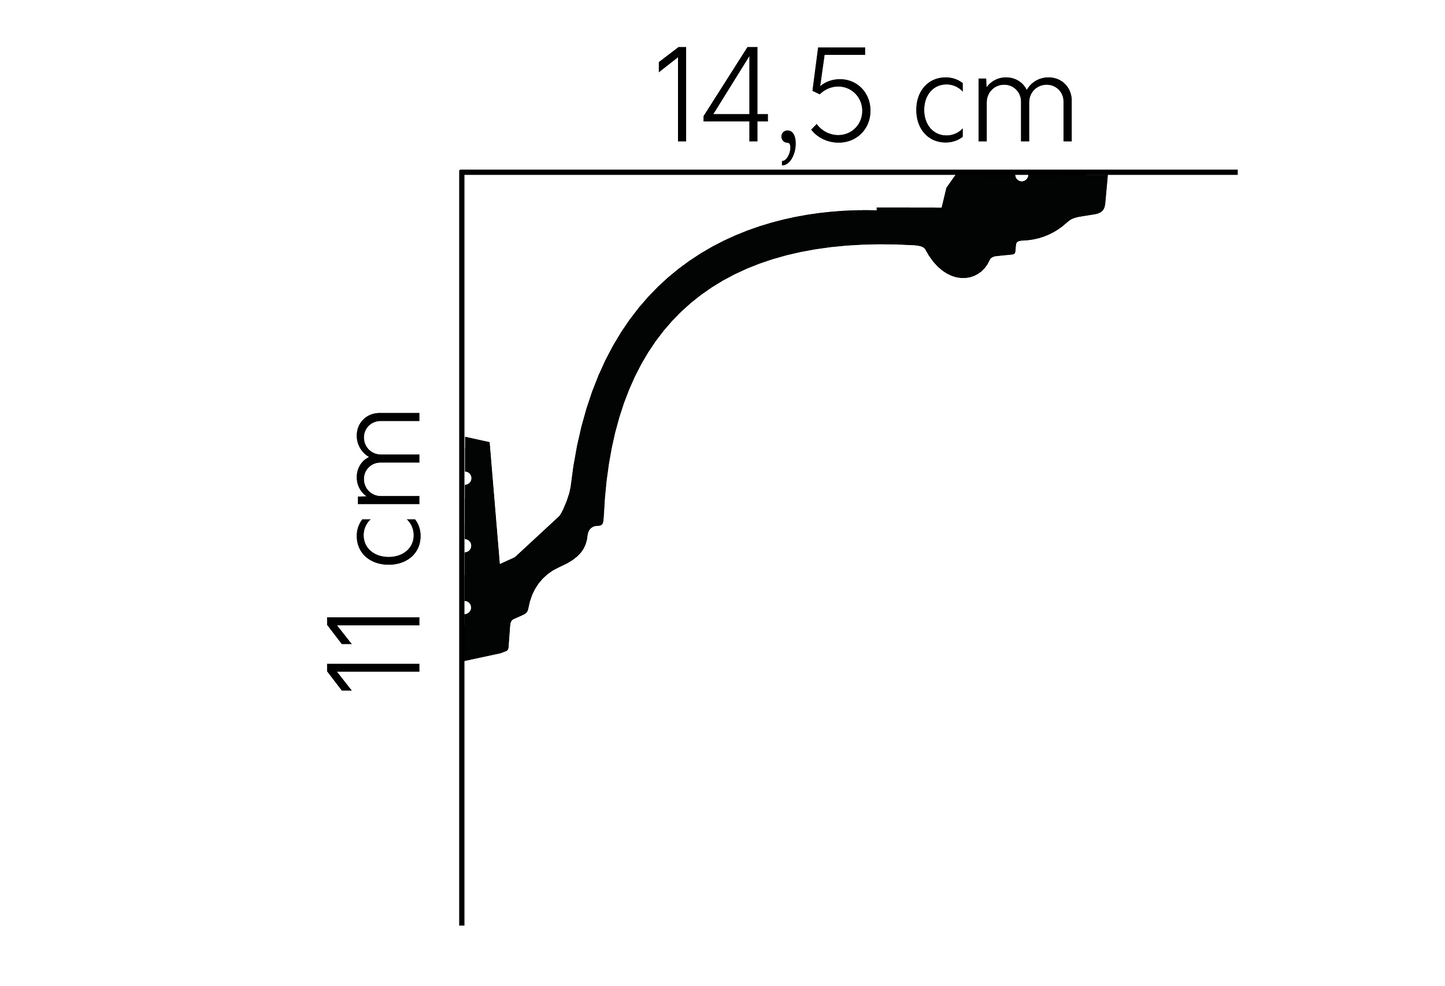 MD156 Curtain Profile